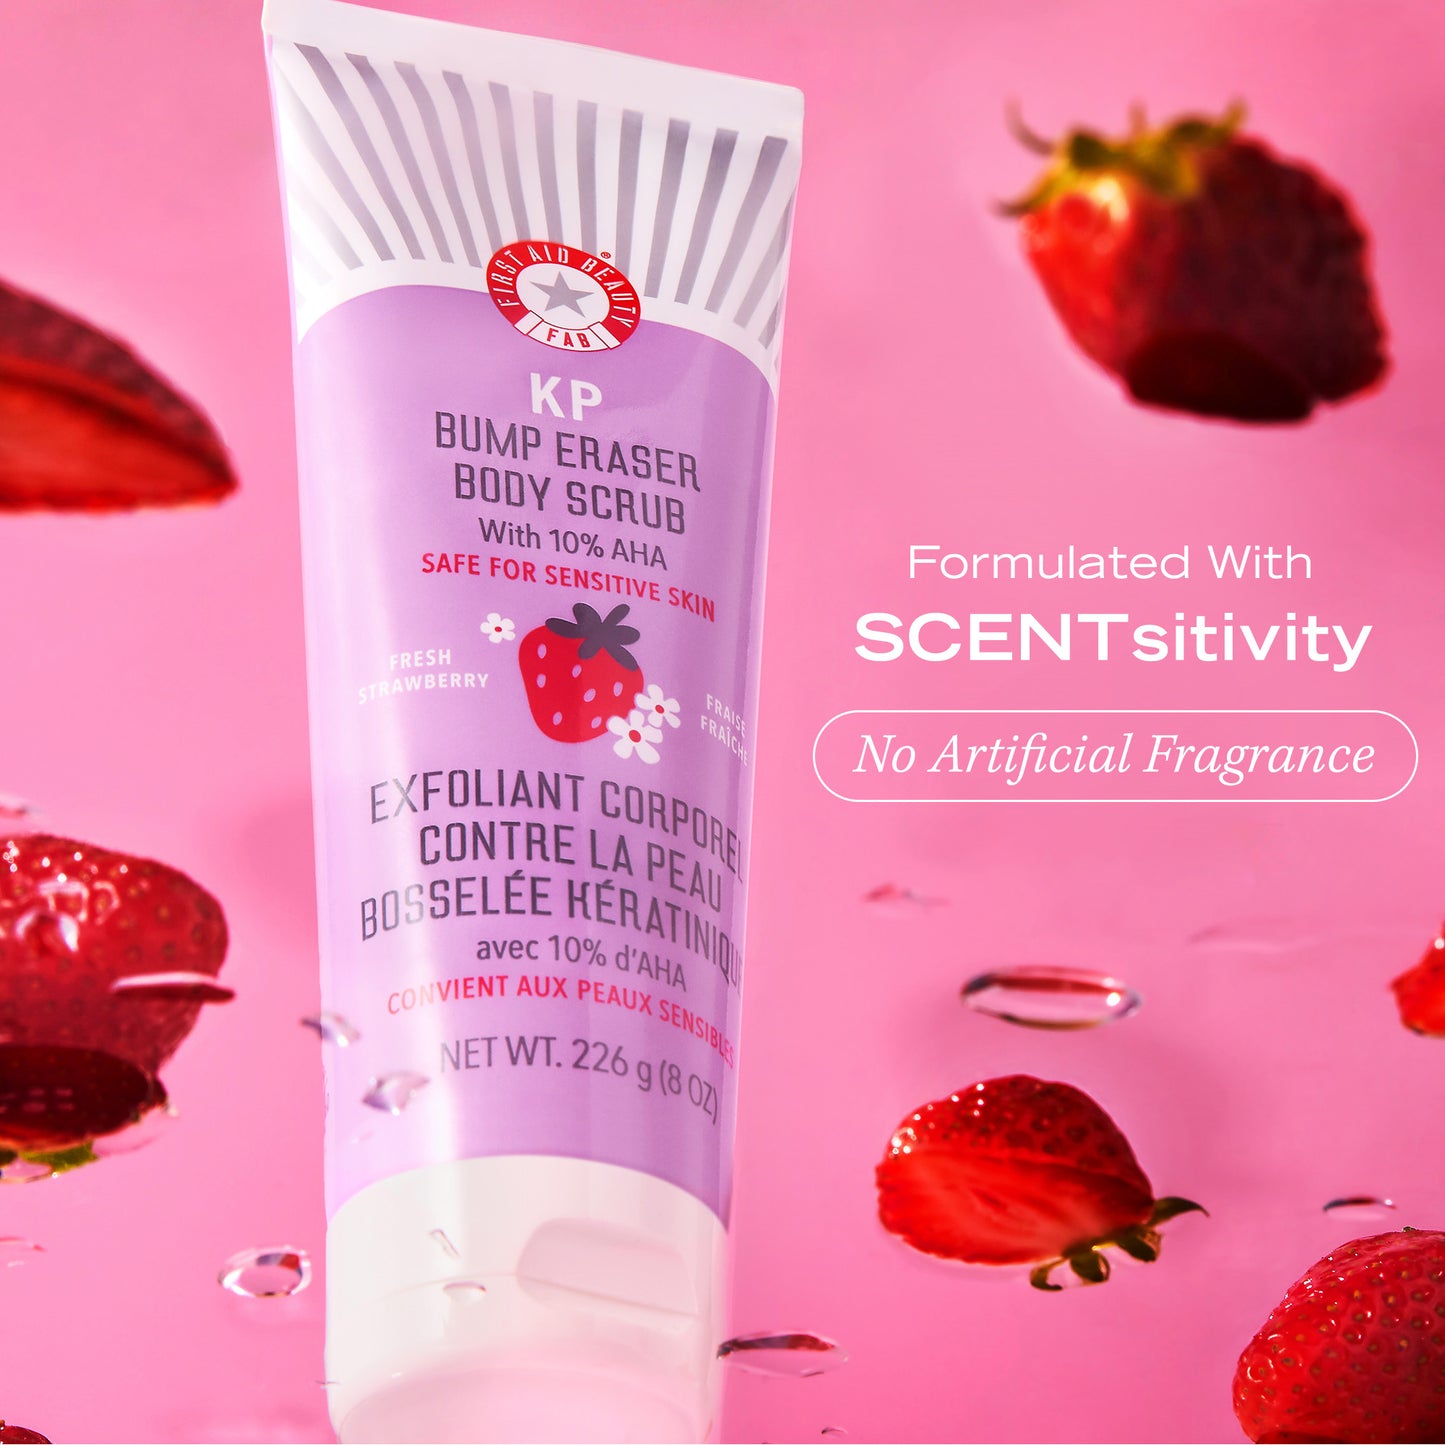 KP Bump Eraser Body Scrub Fresh Strawberry is formulated with SCENTsitivity. No Artificial Fragrance.